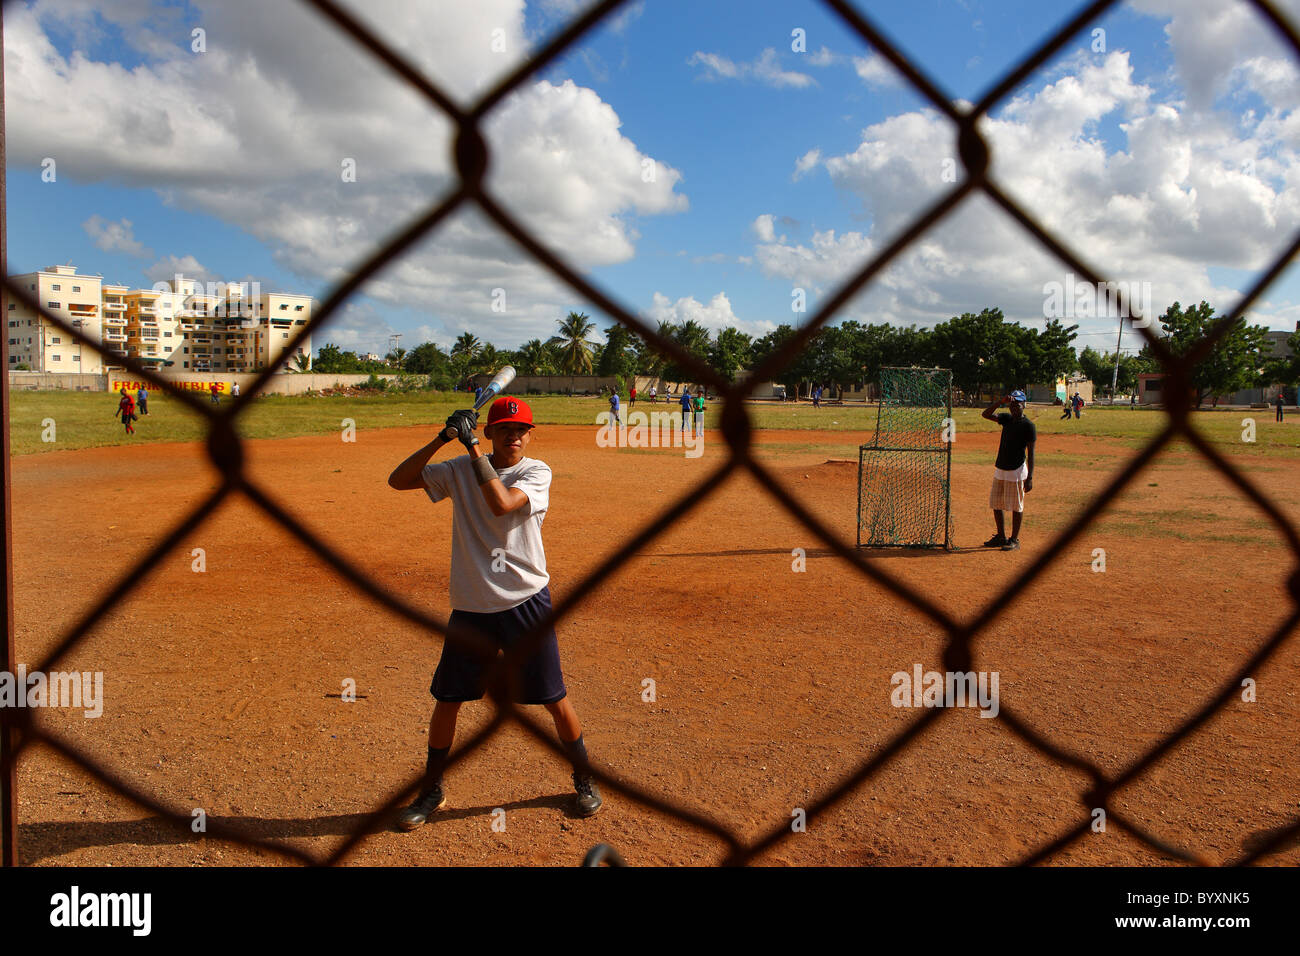 Caribbean, Dominican Republic, children playing baseball, the national sport Stock Photo